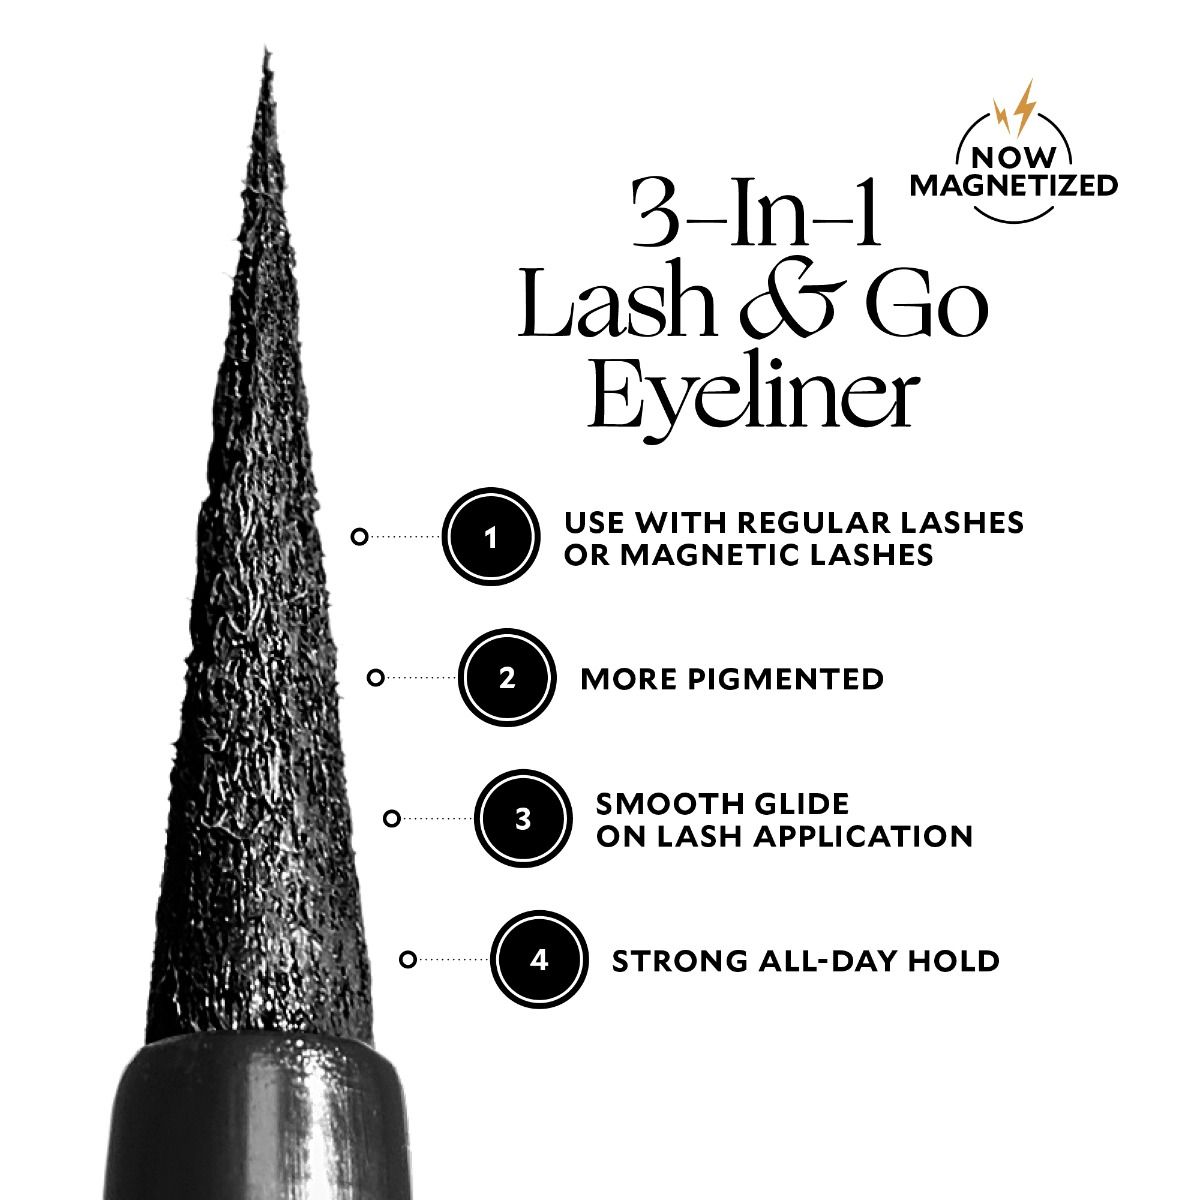 Lash & Go Eyeliner